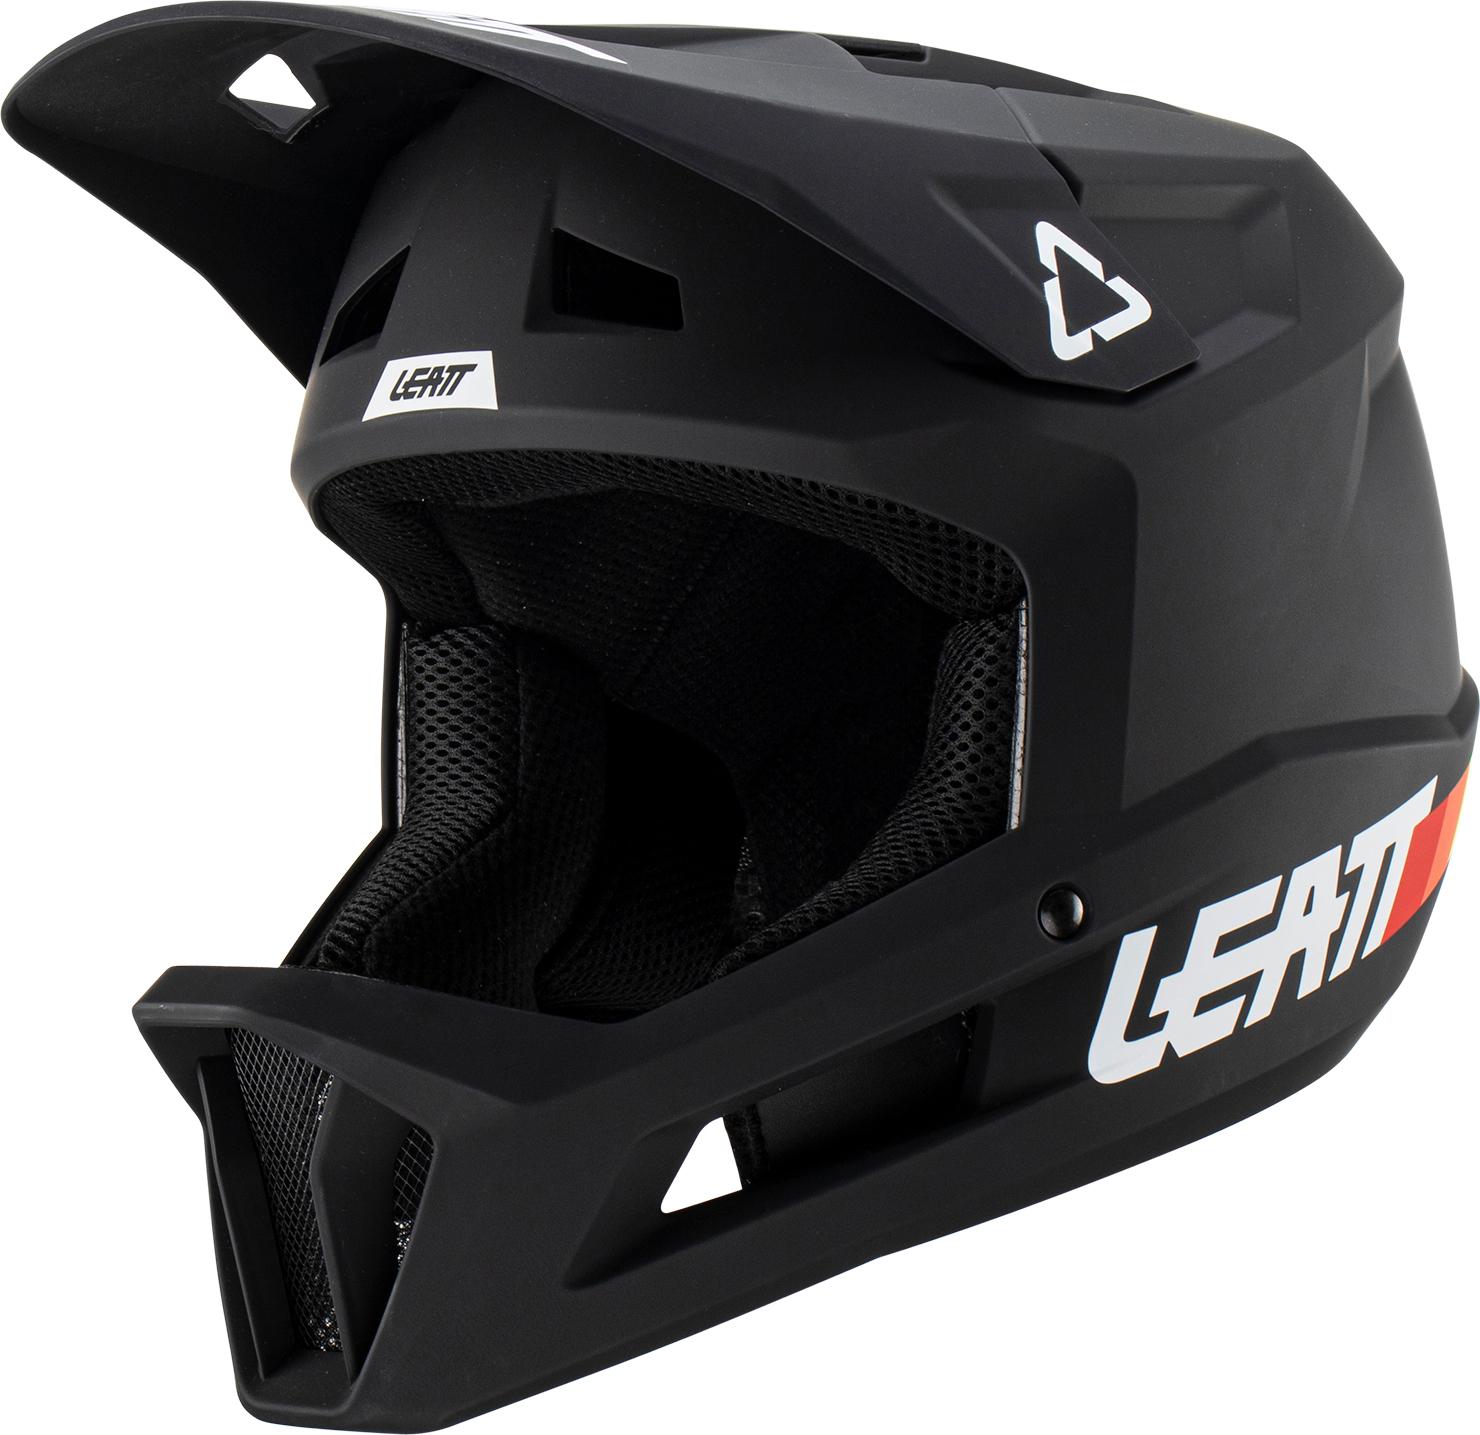 Leatt Mtb Gravity 1.0 Helmet - Black